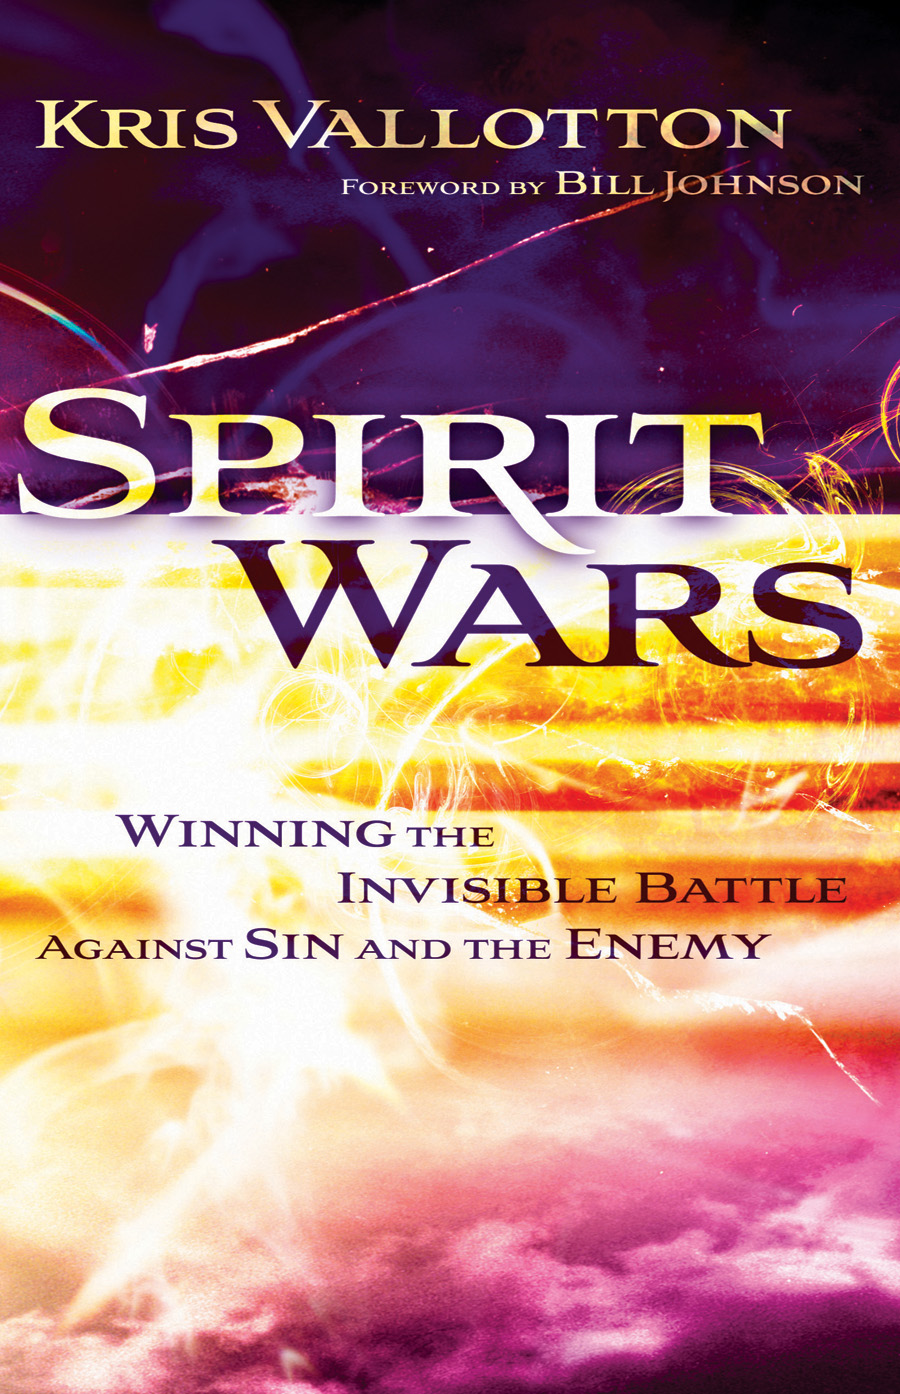 Book Review: Kris Vallotton’s Spirit Wars